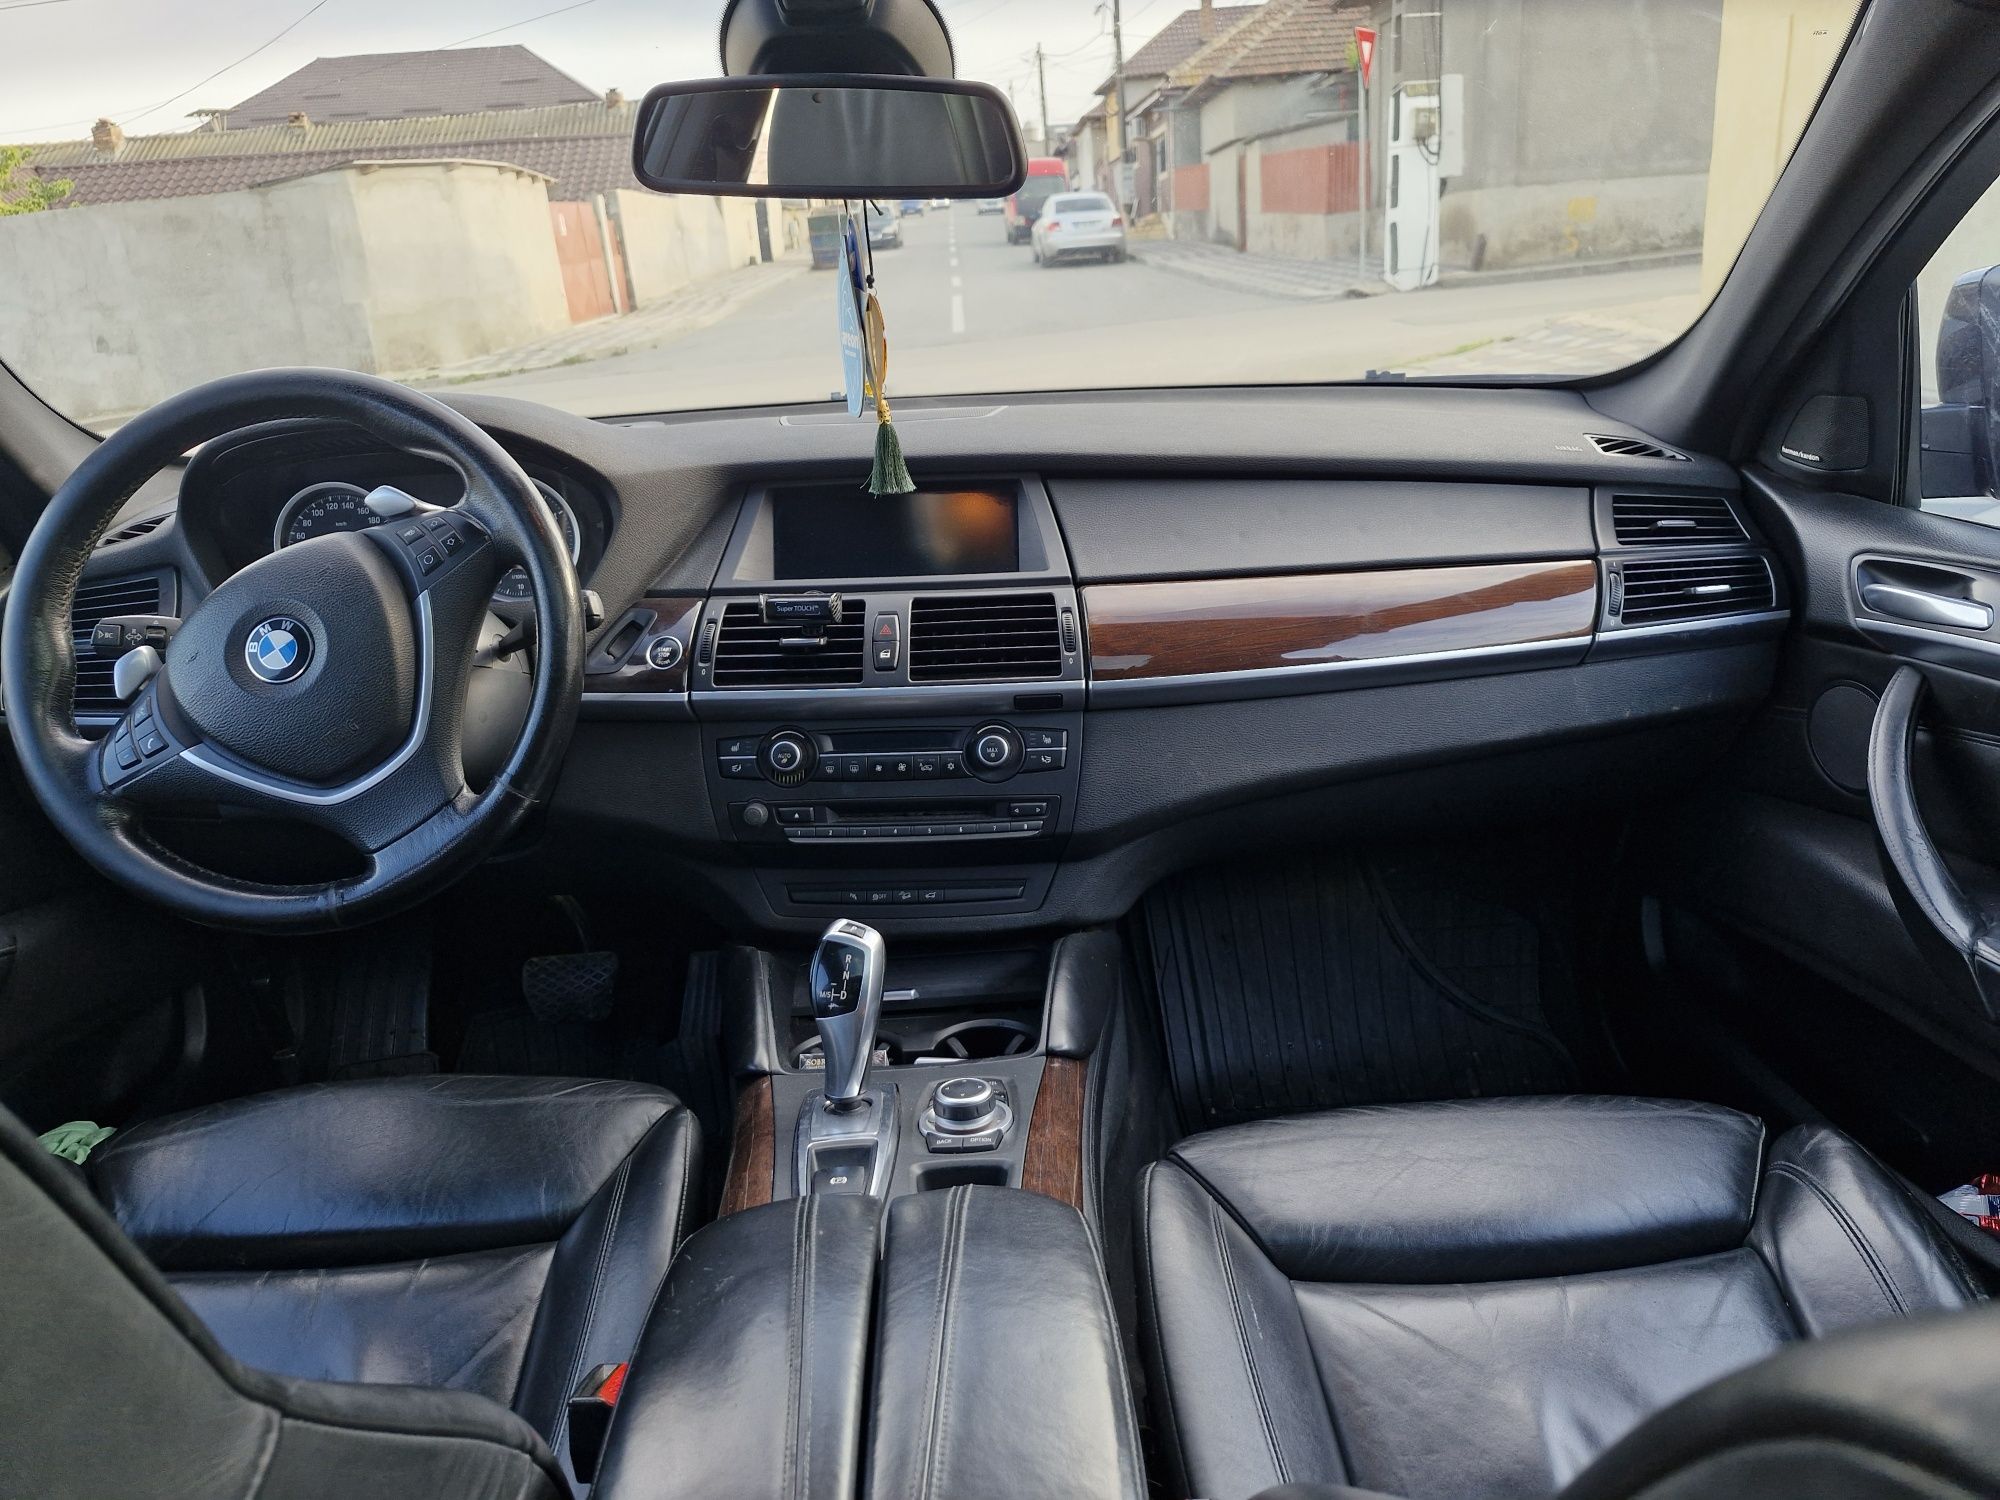 BMW X6 3.0 twin turbo 313hp